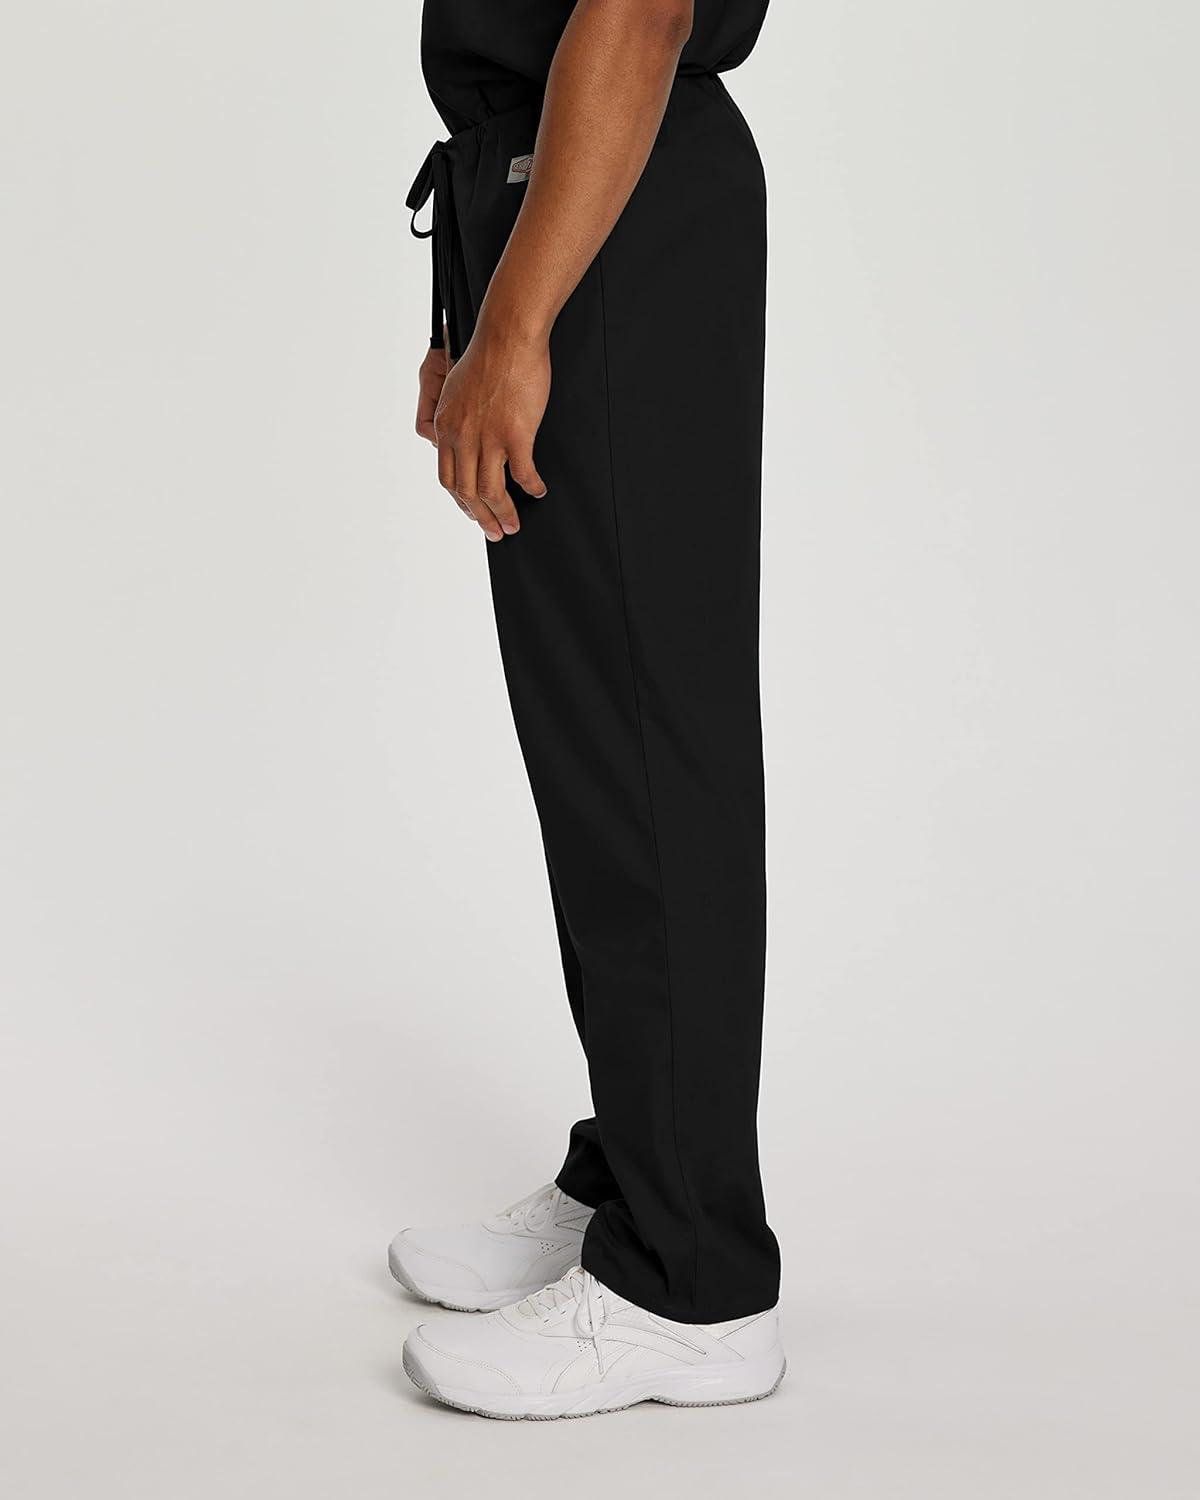 Landau Scrub Zone Unisex Relaxed Fit No-Pocket Scrub Pants LB403 Large Black